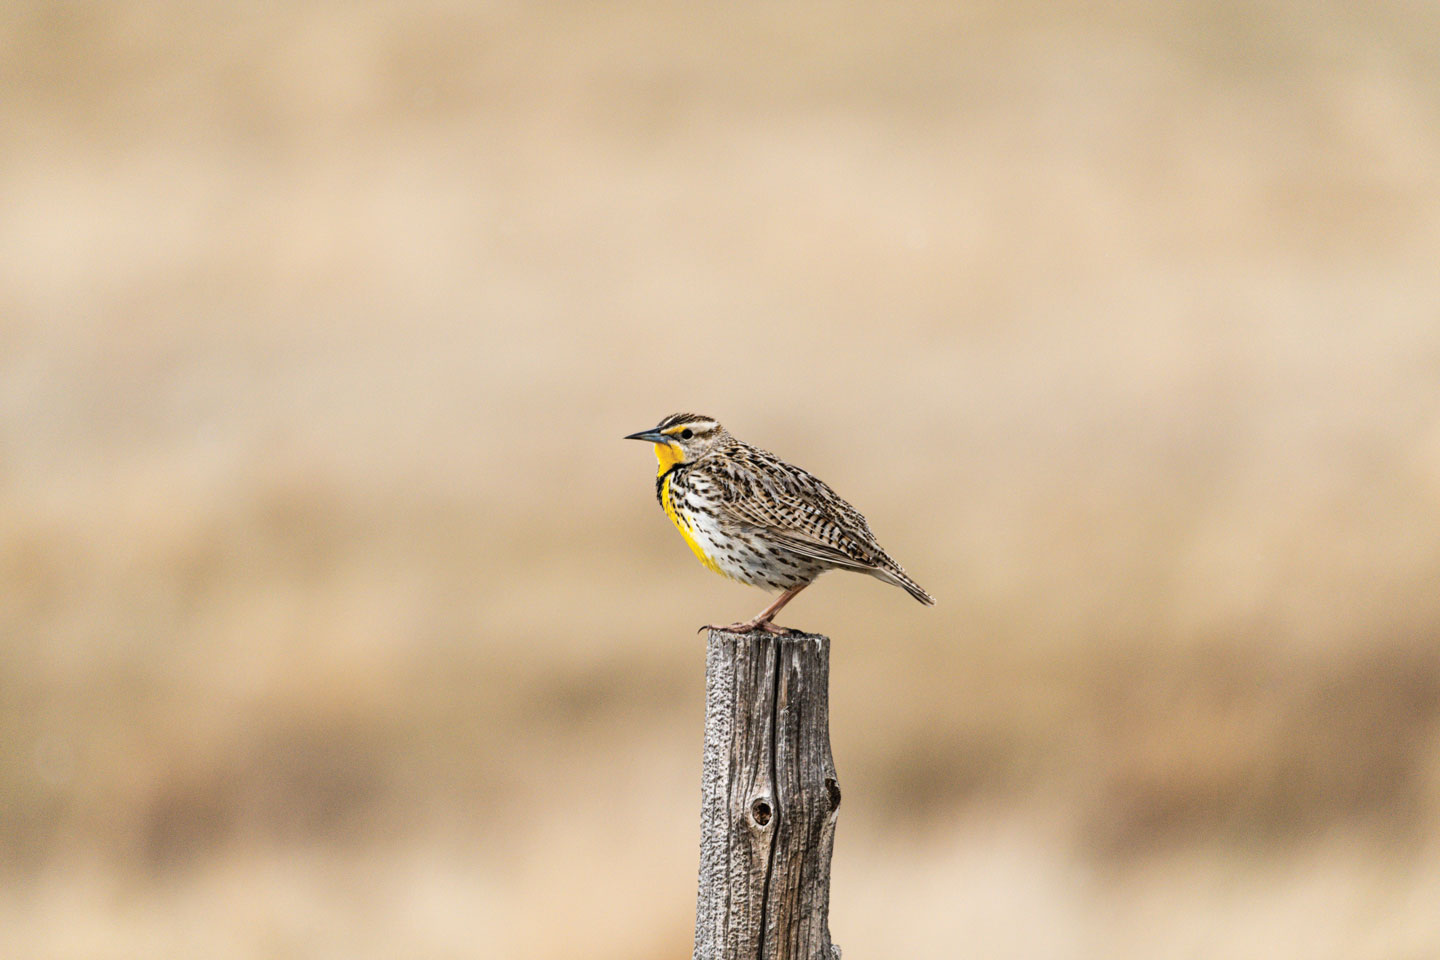 Read More: Participate in first Nebraska Birding Bowl